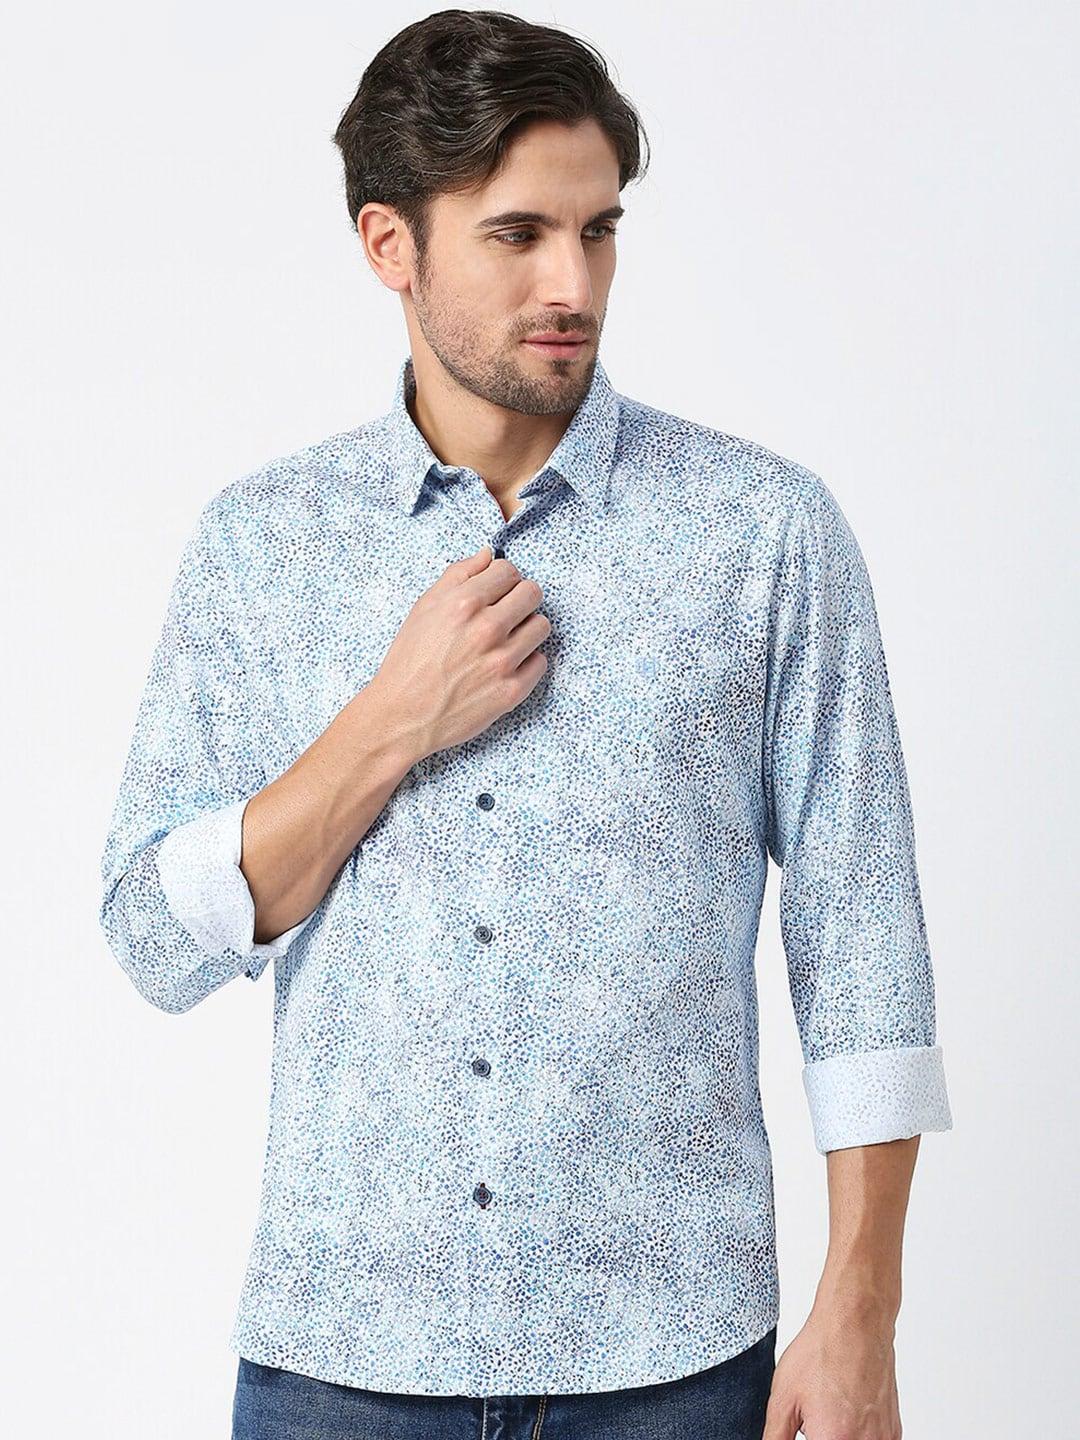 dragon-hill-slim-fit-abstract-printed-satin-casual-shirt